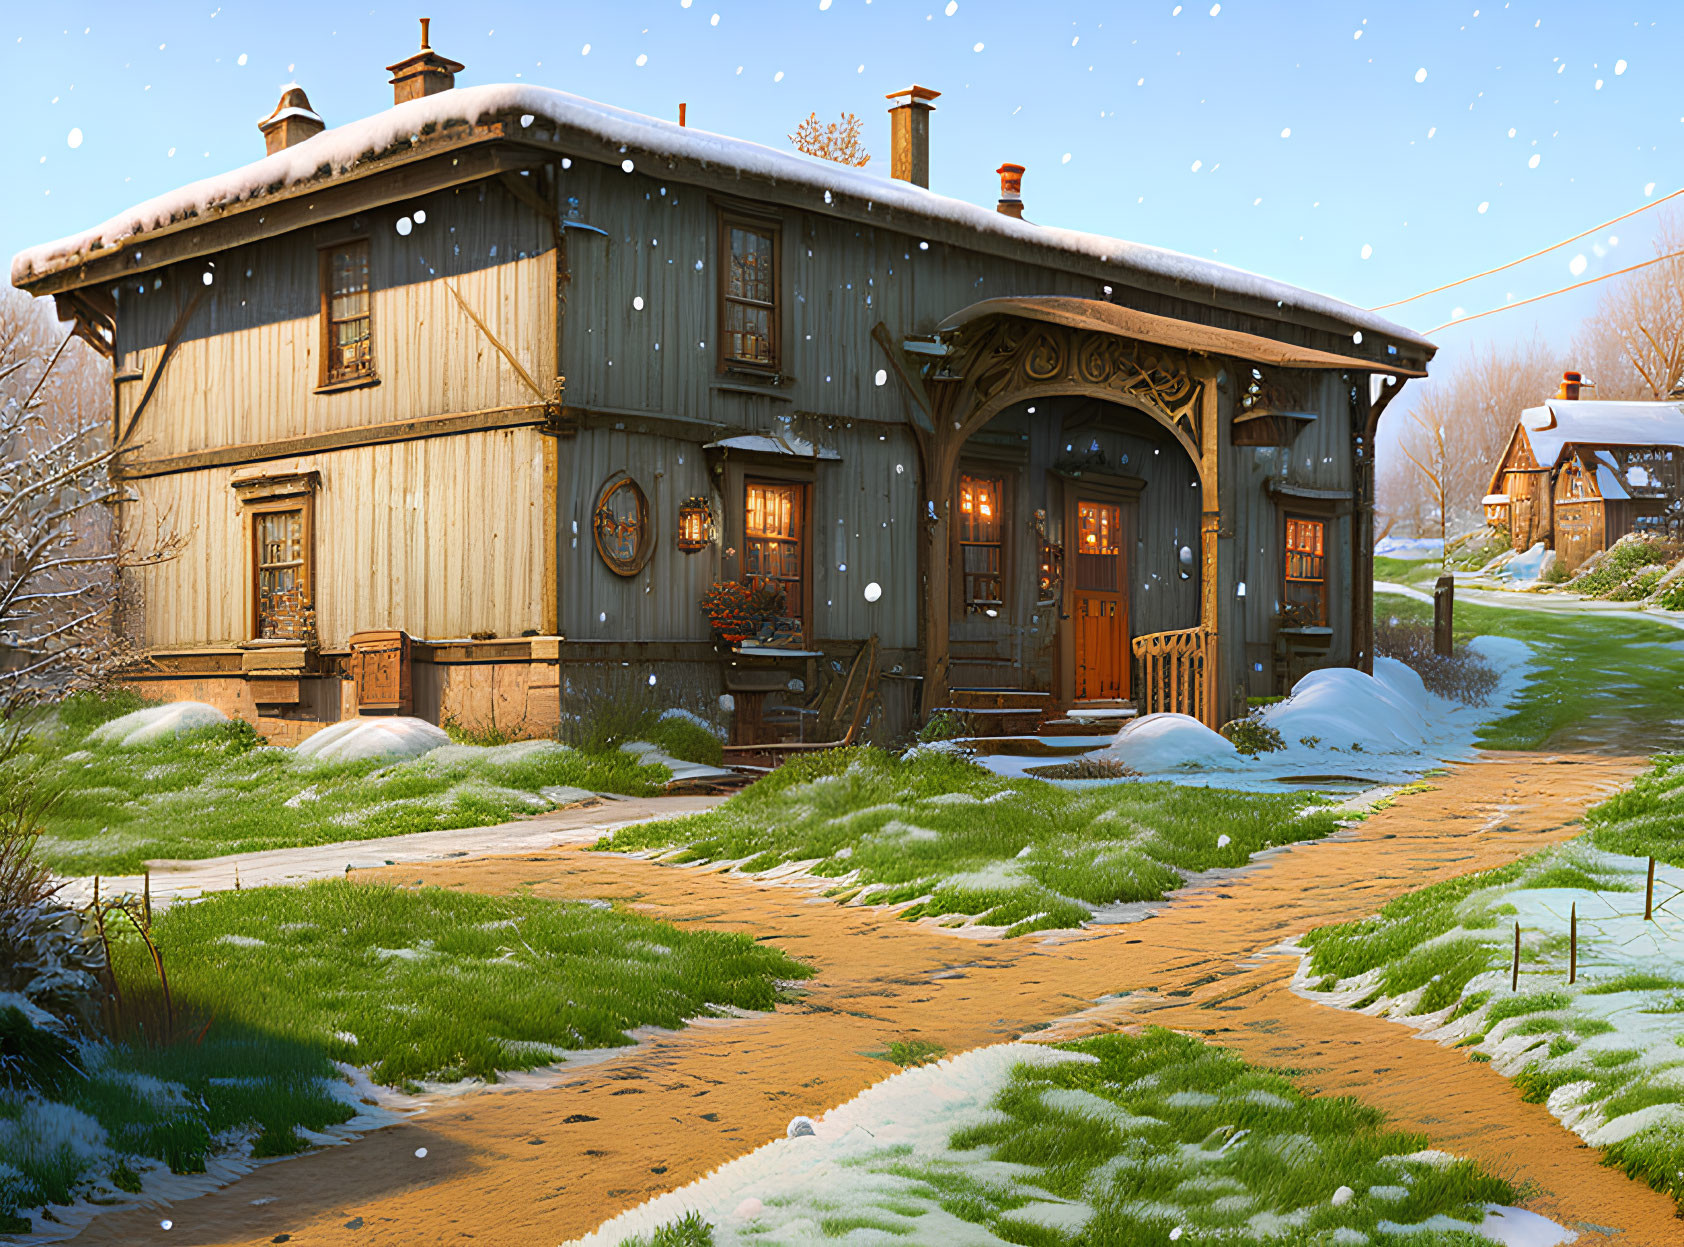 Snowy Landscape: Cozy Wooden Cottage at Dusk in Warm Lights